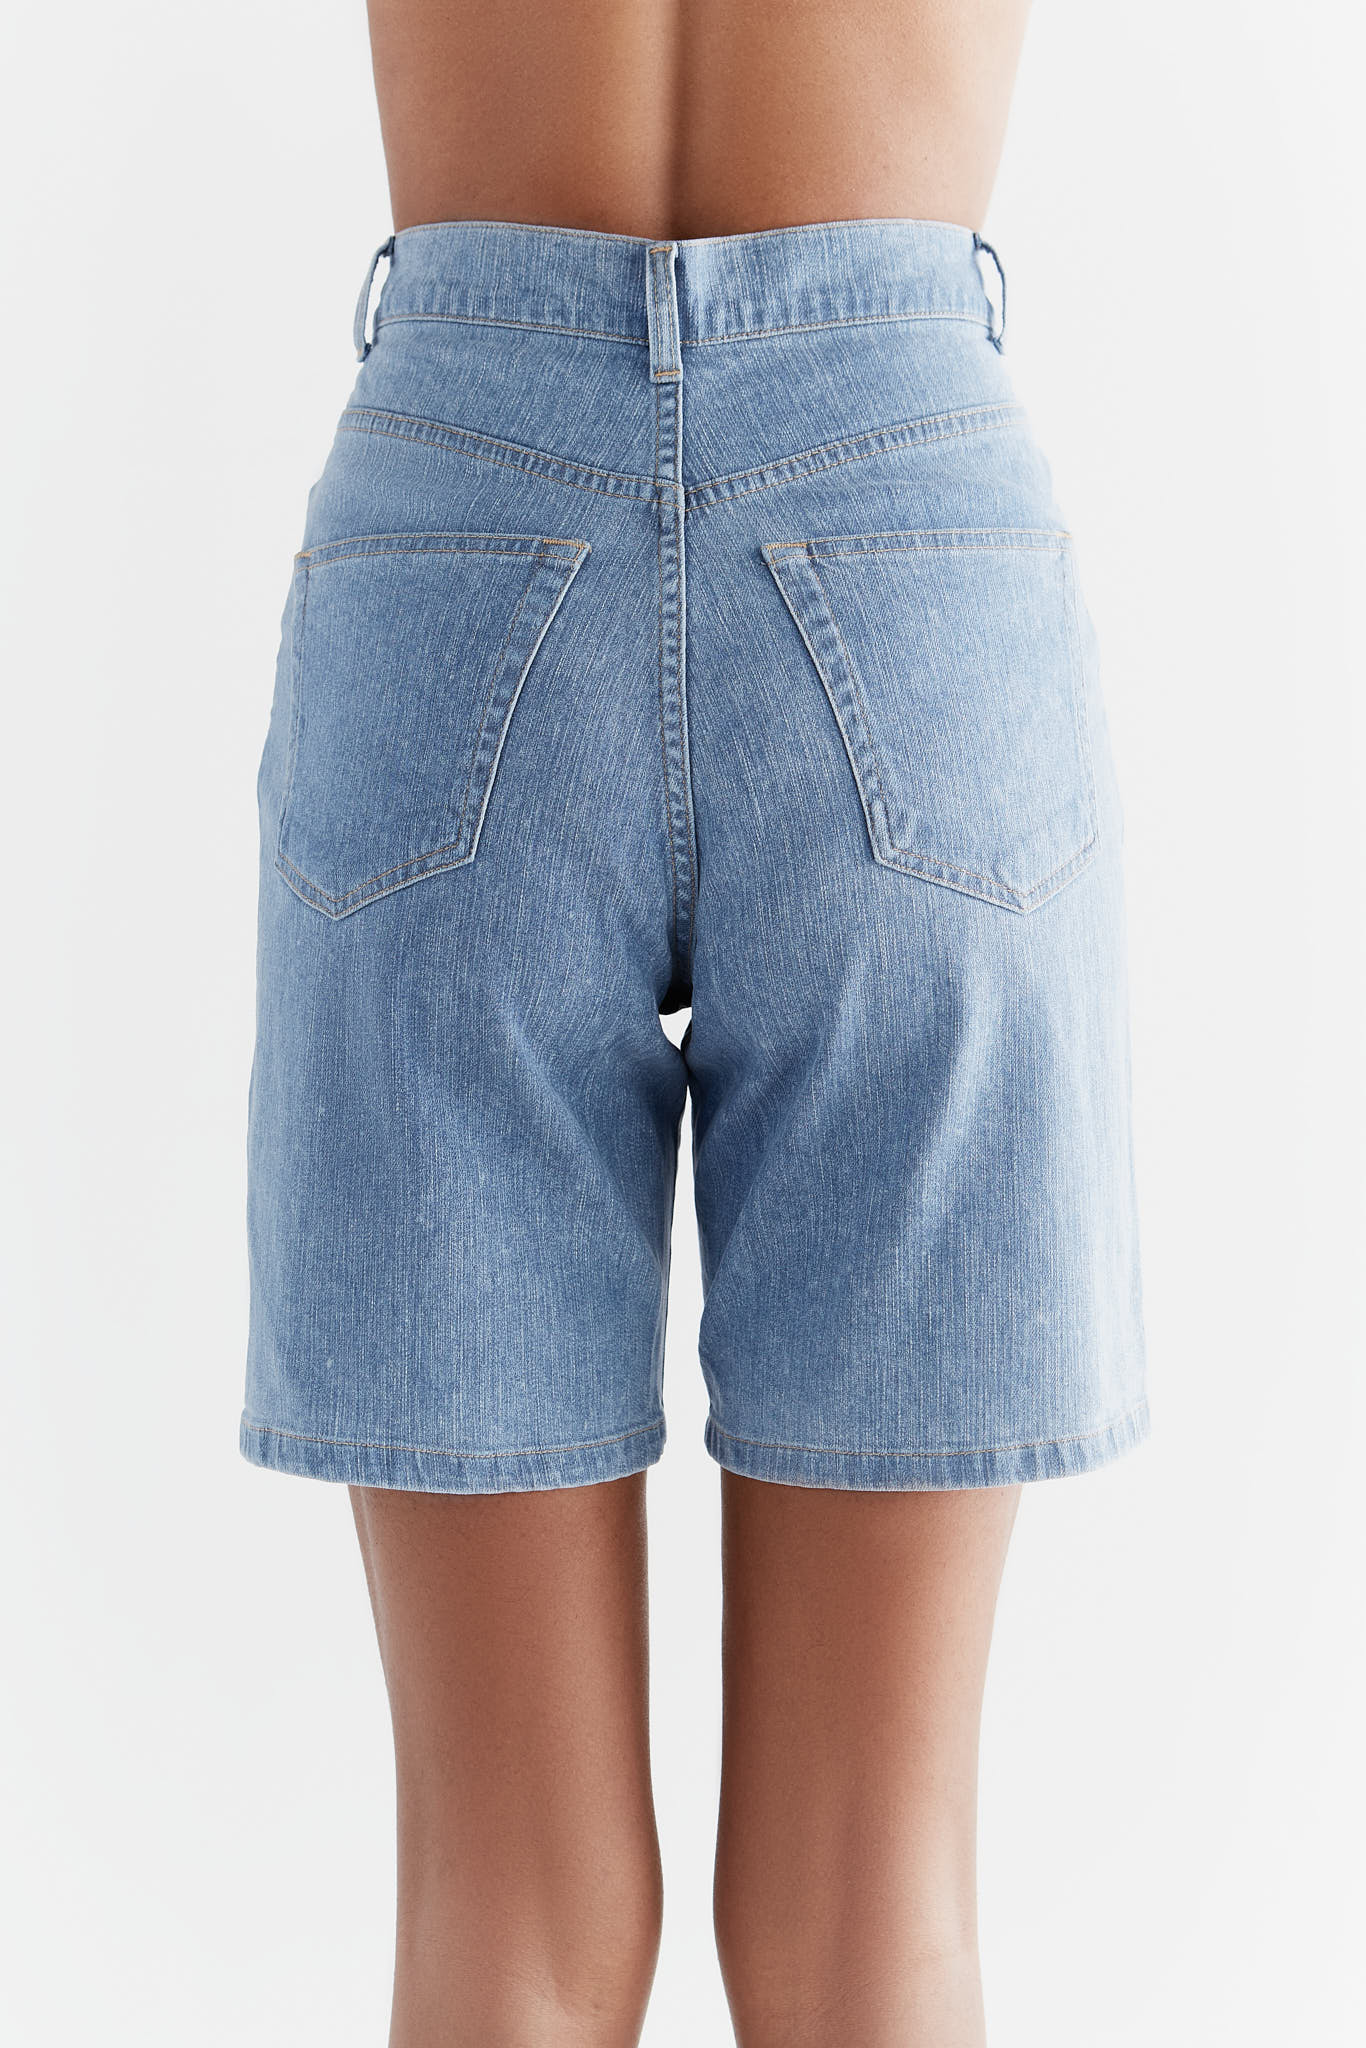 WA3020-352 | Women Denim Shorts - Light Slate Blue